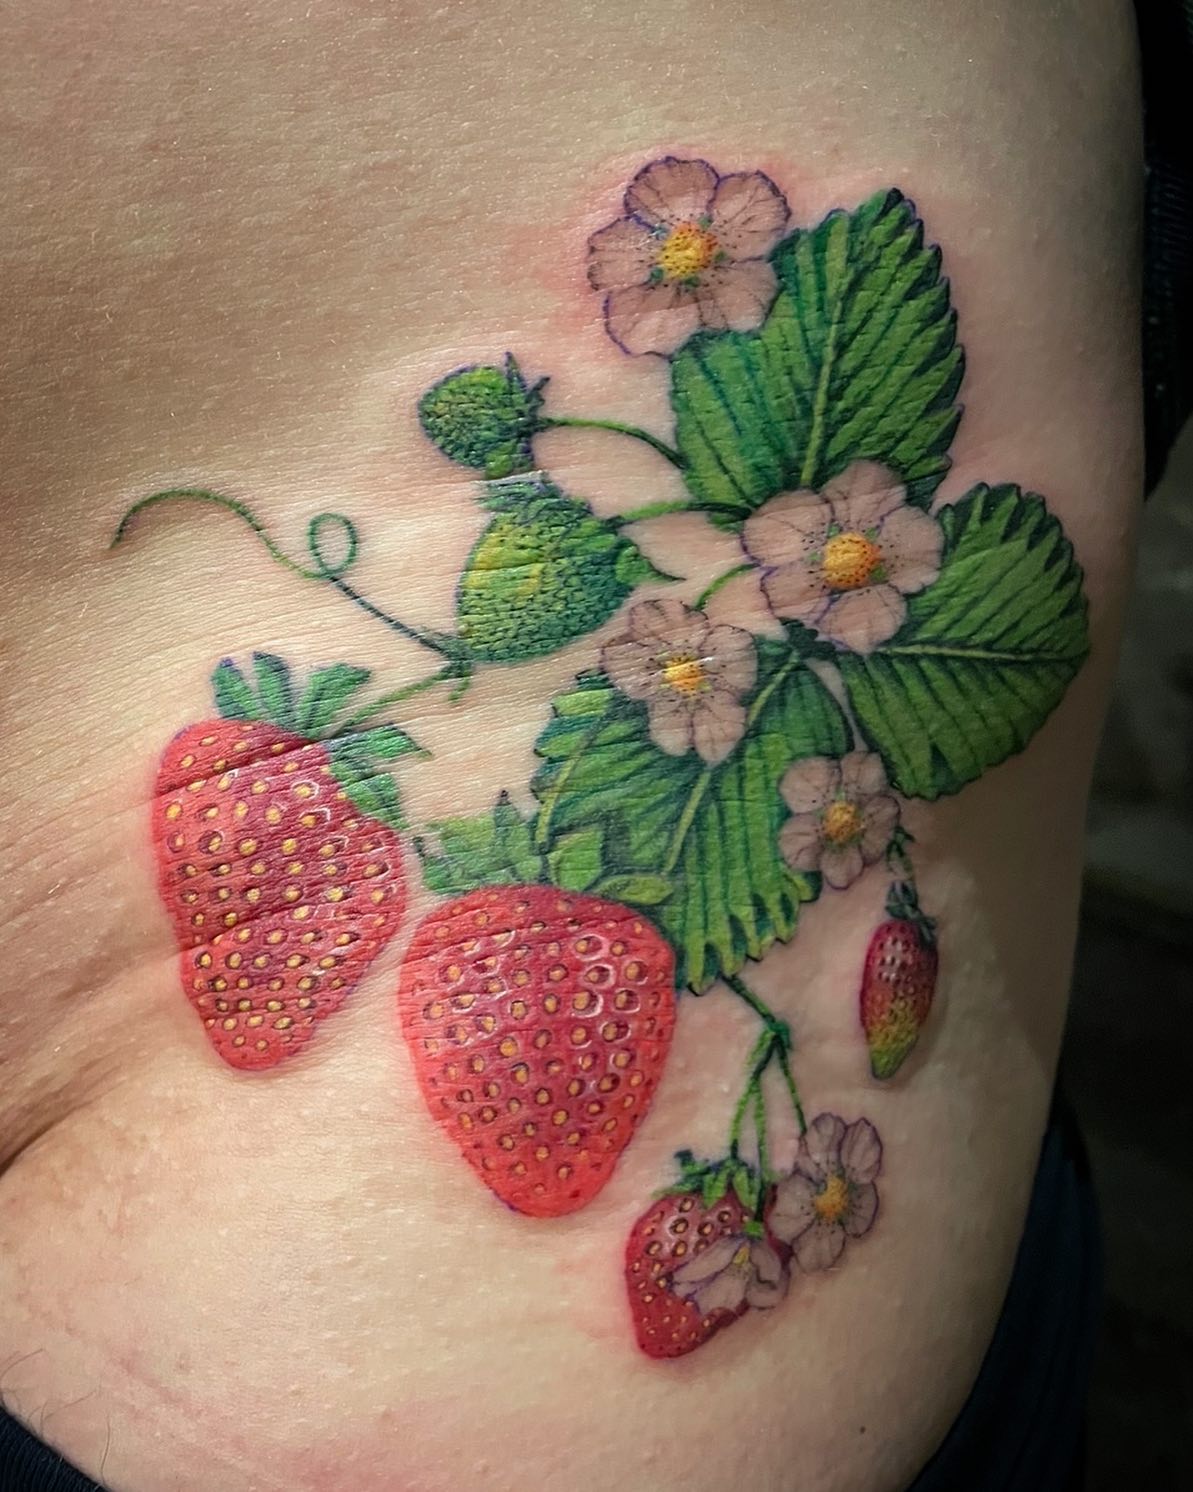 Kleine Erdbeeren 
•
•
•
#inked #ink #inkstagram #tattoo #tattoos #tattoed #erdbe